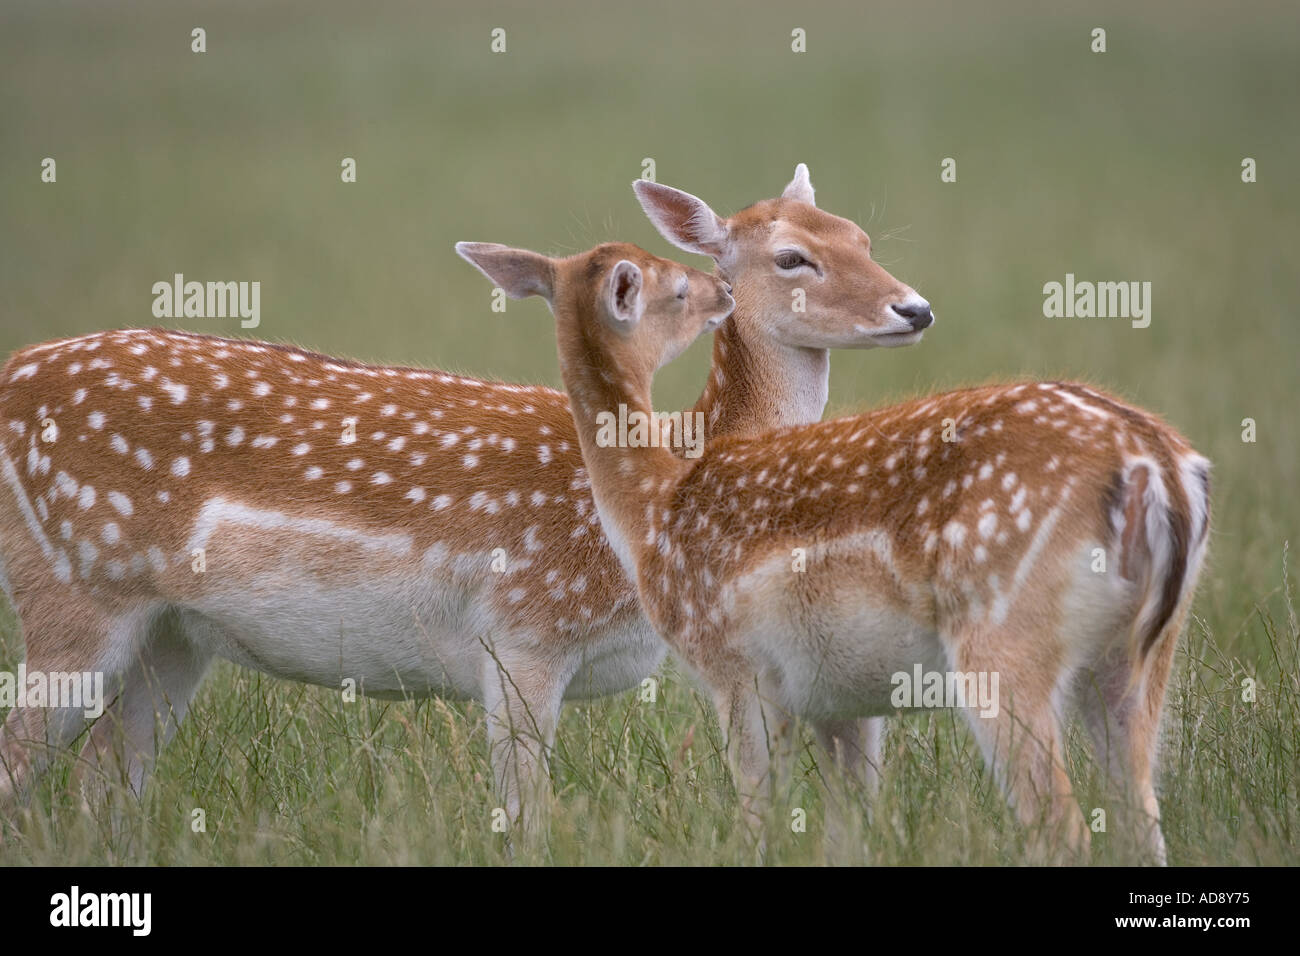 Fallow Deer Cervus dama Does mutual grooming Stock Photo